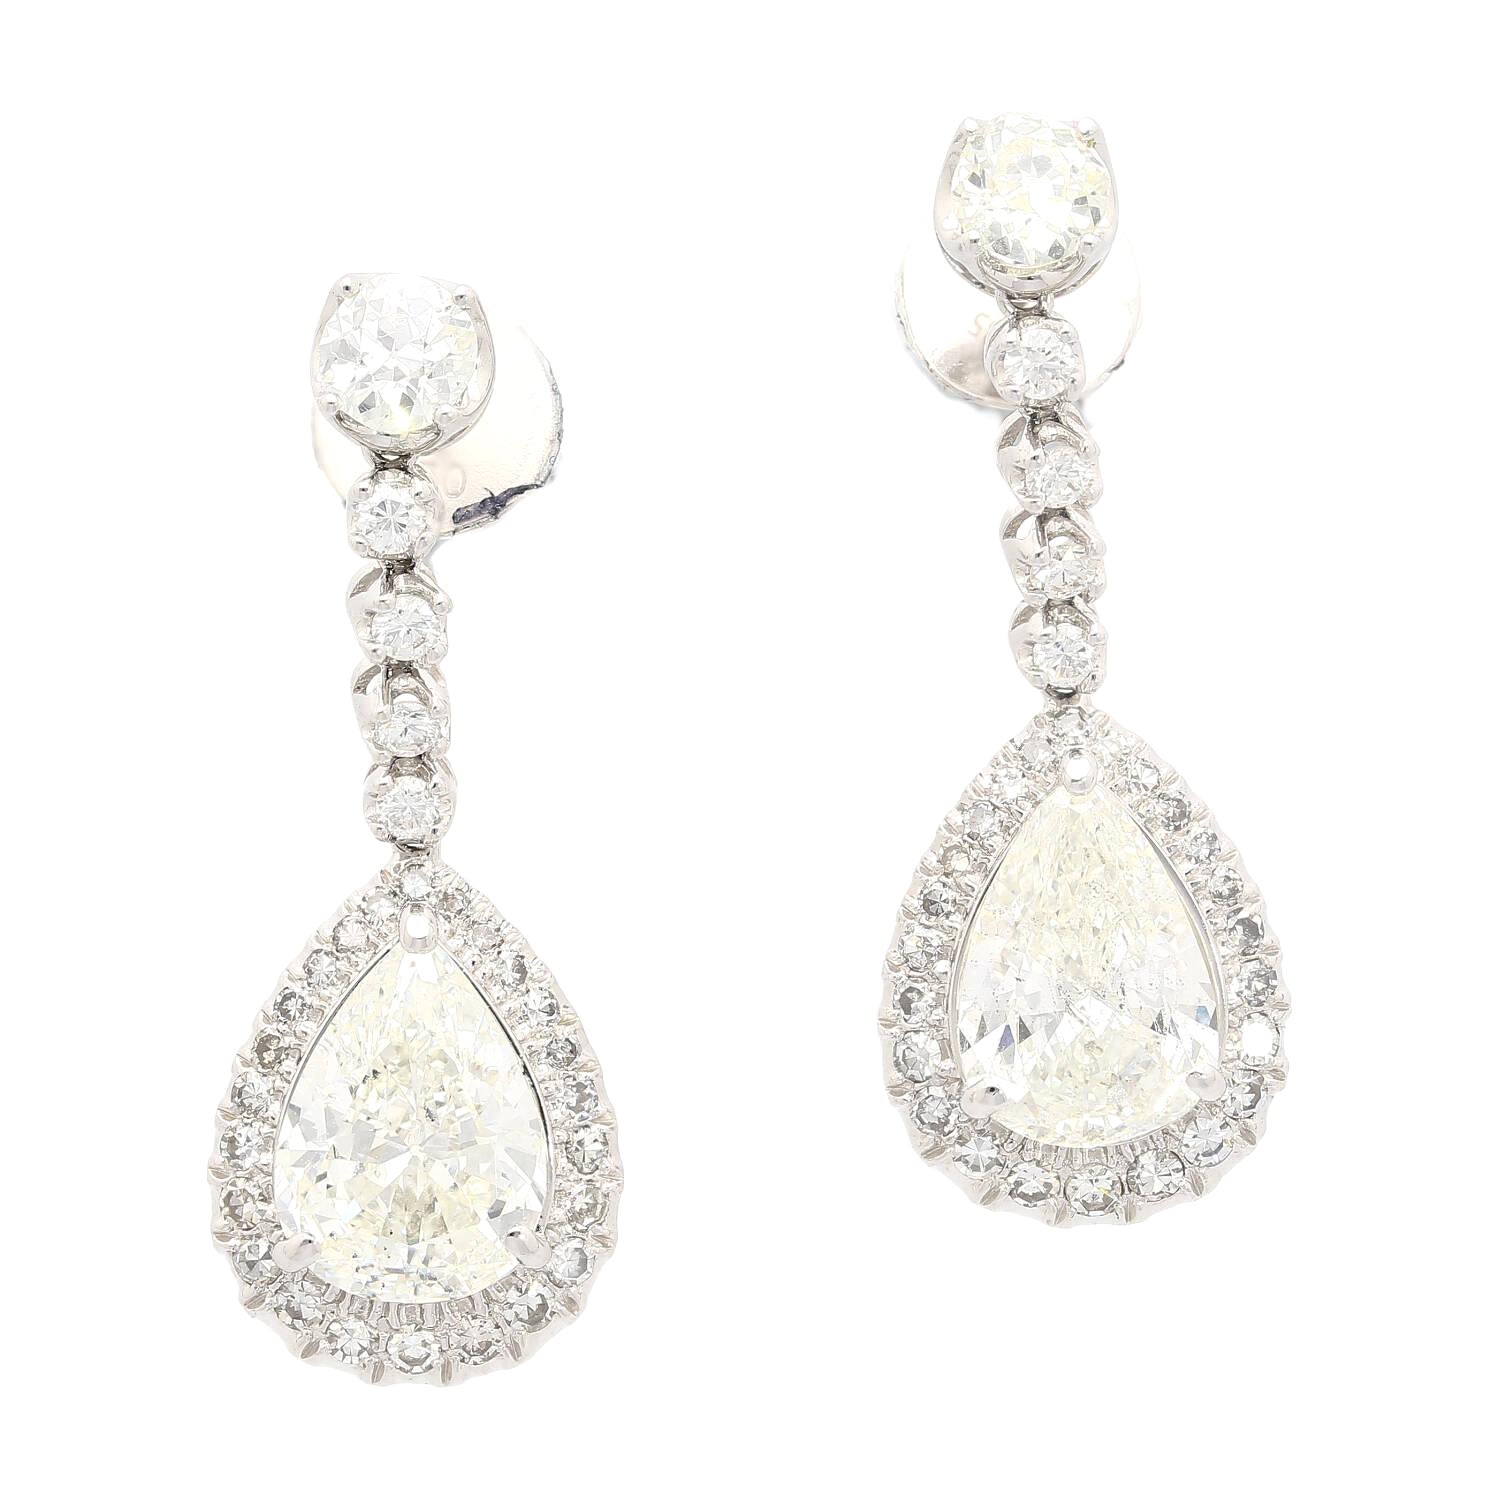 7.5 Carat Gia Certified Pear Cut Natural Diamond Drop Earrings in 18k White Gold